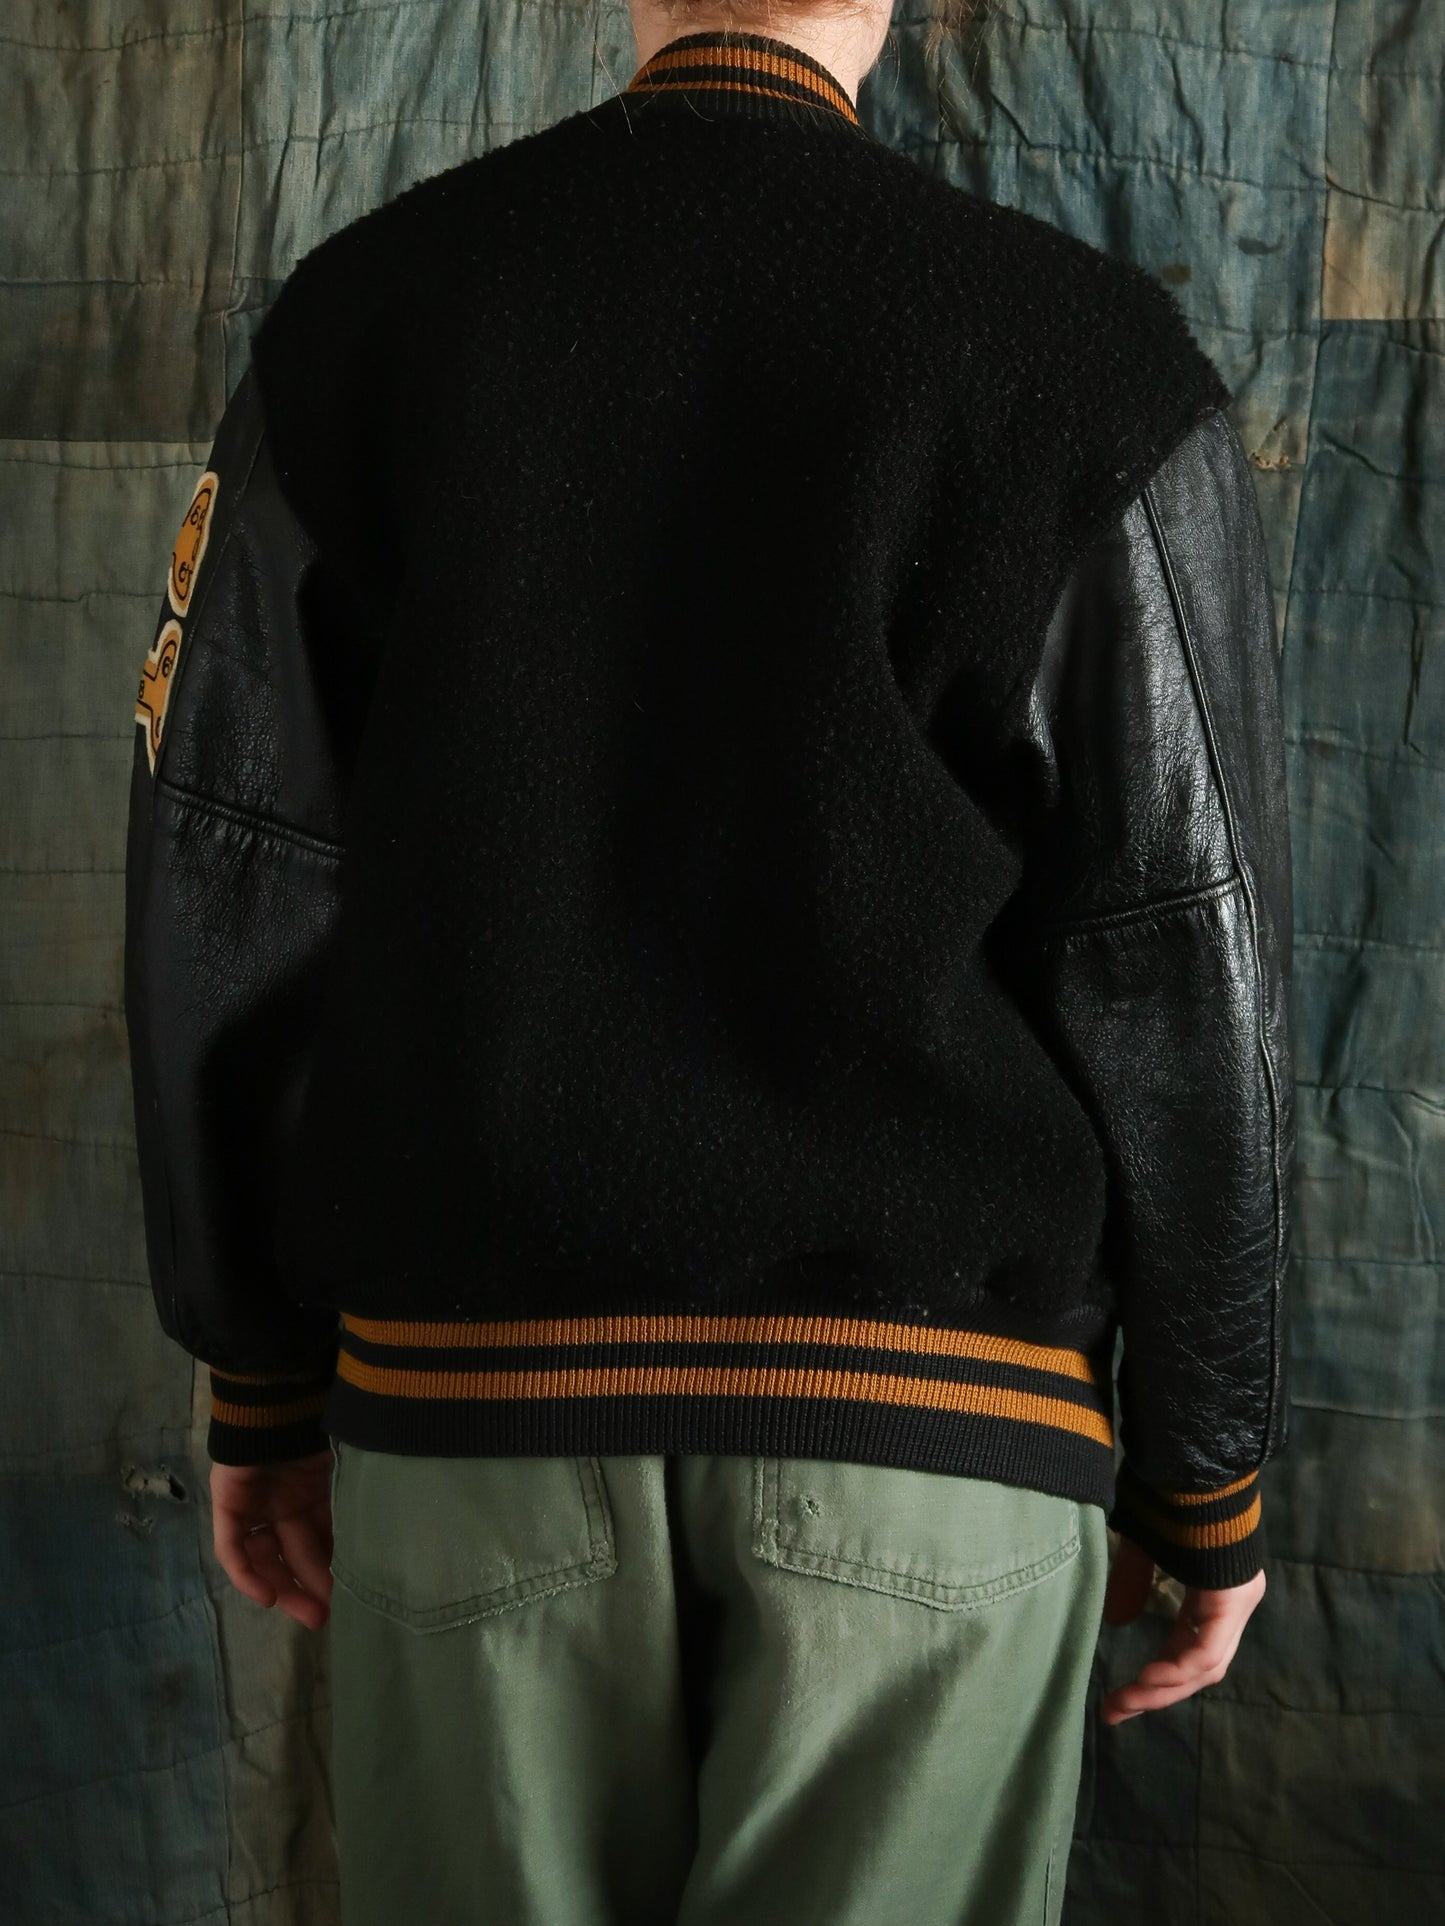 1960s Sherpa Black Letterman Jacket Size M/L